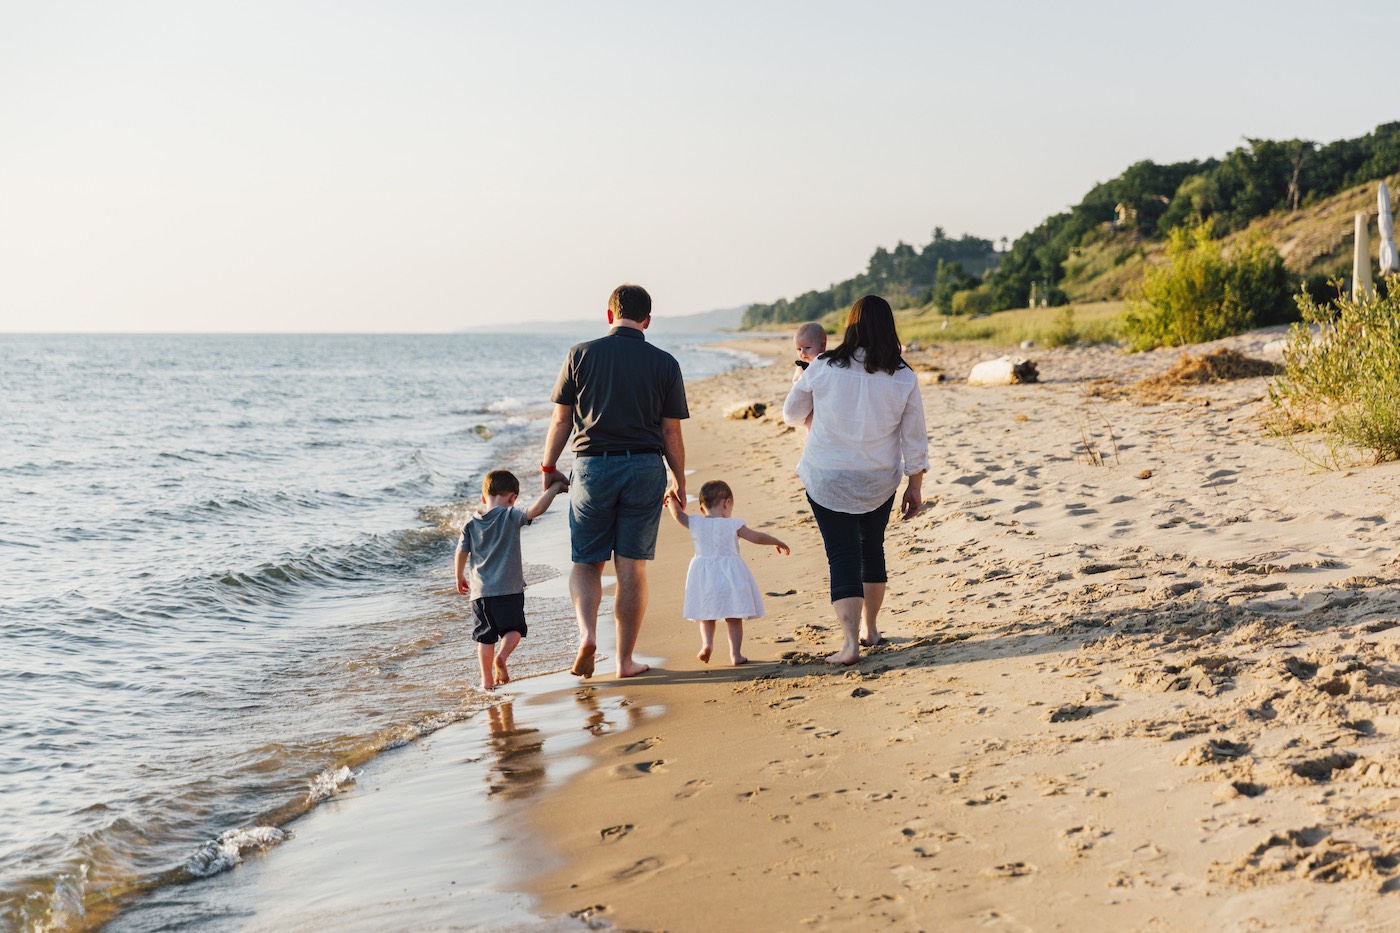 Family walks along a beach at sunset